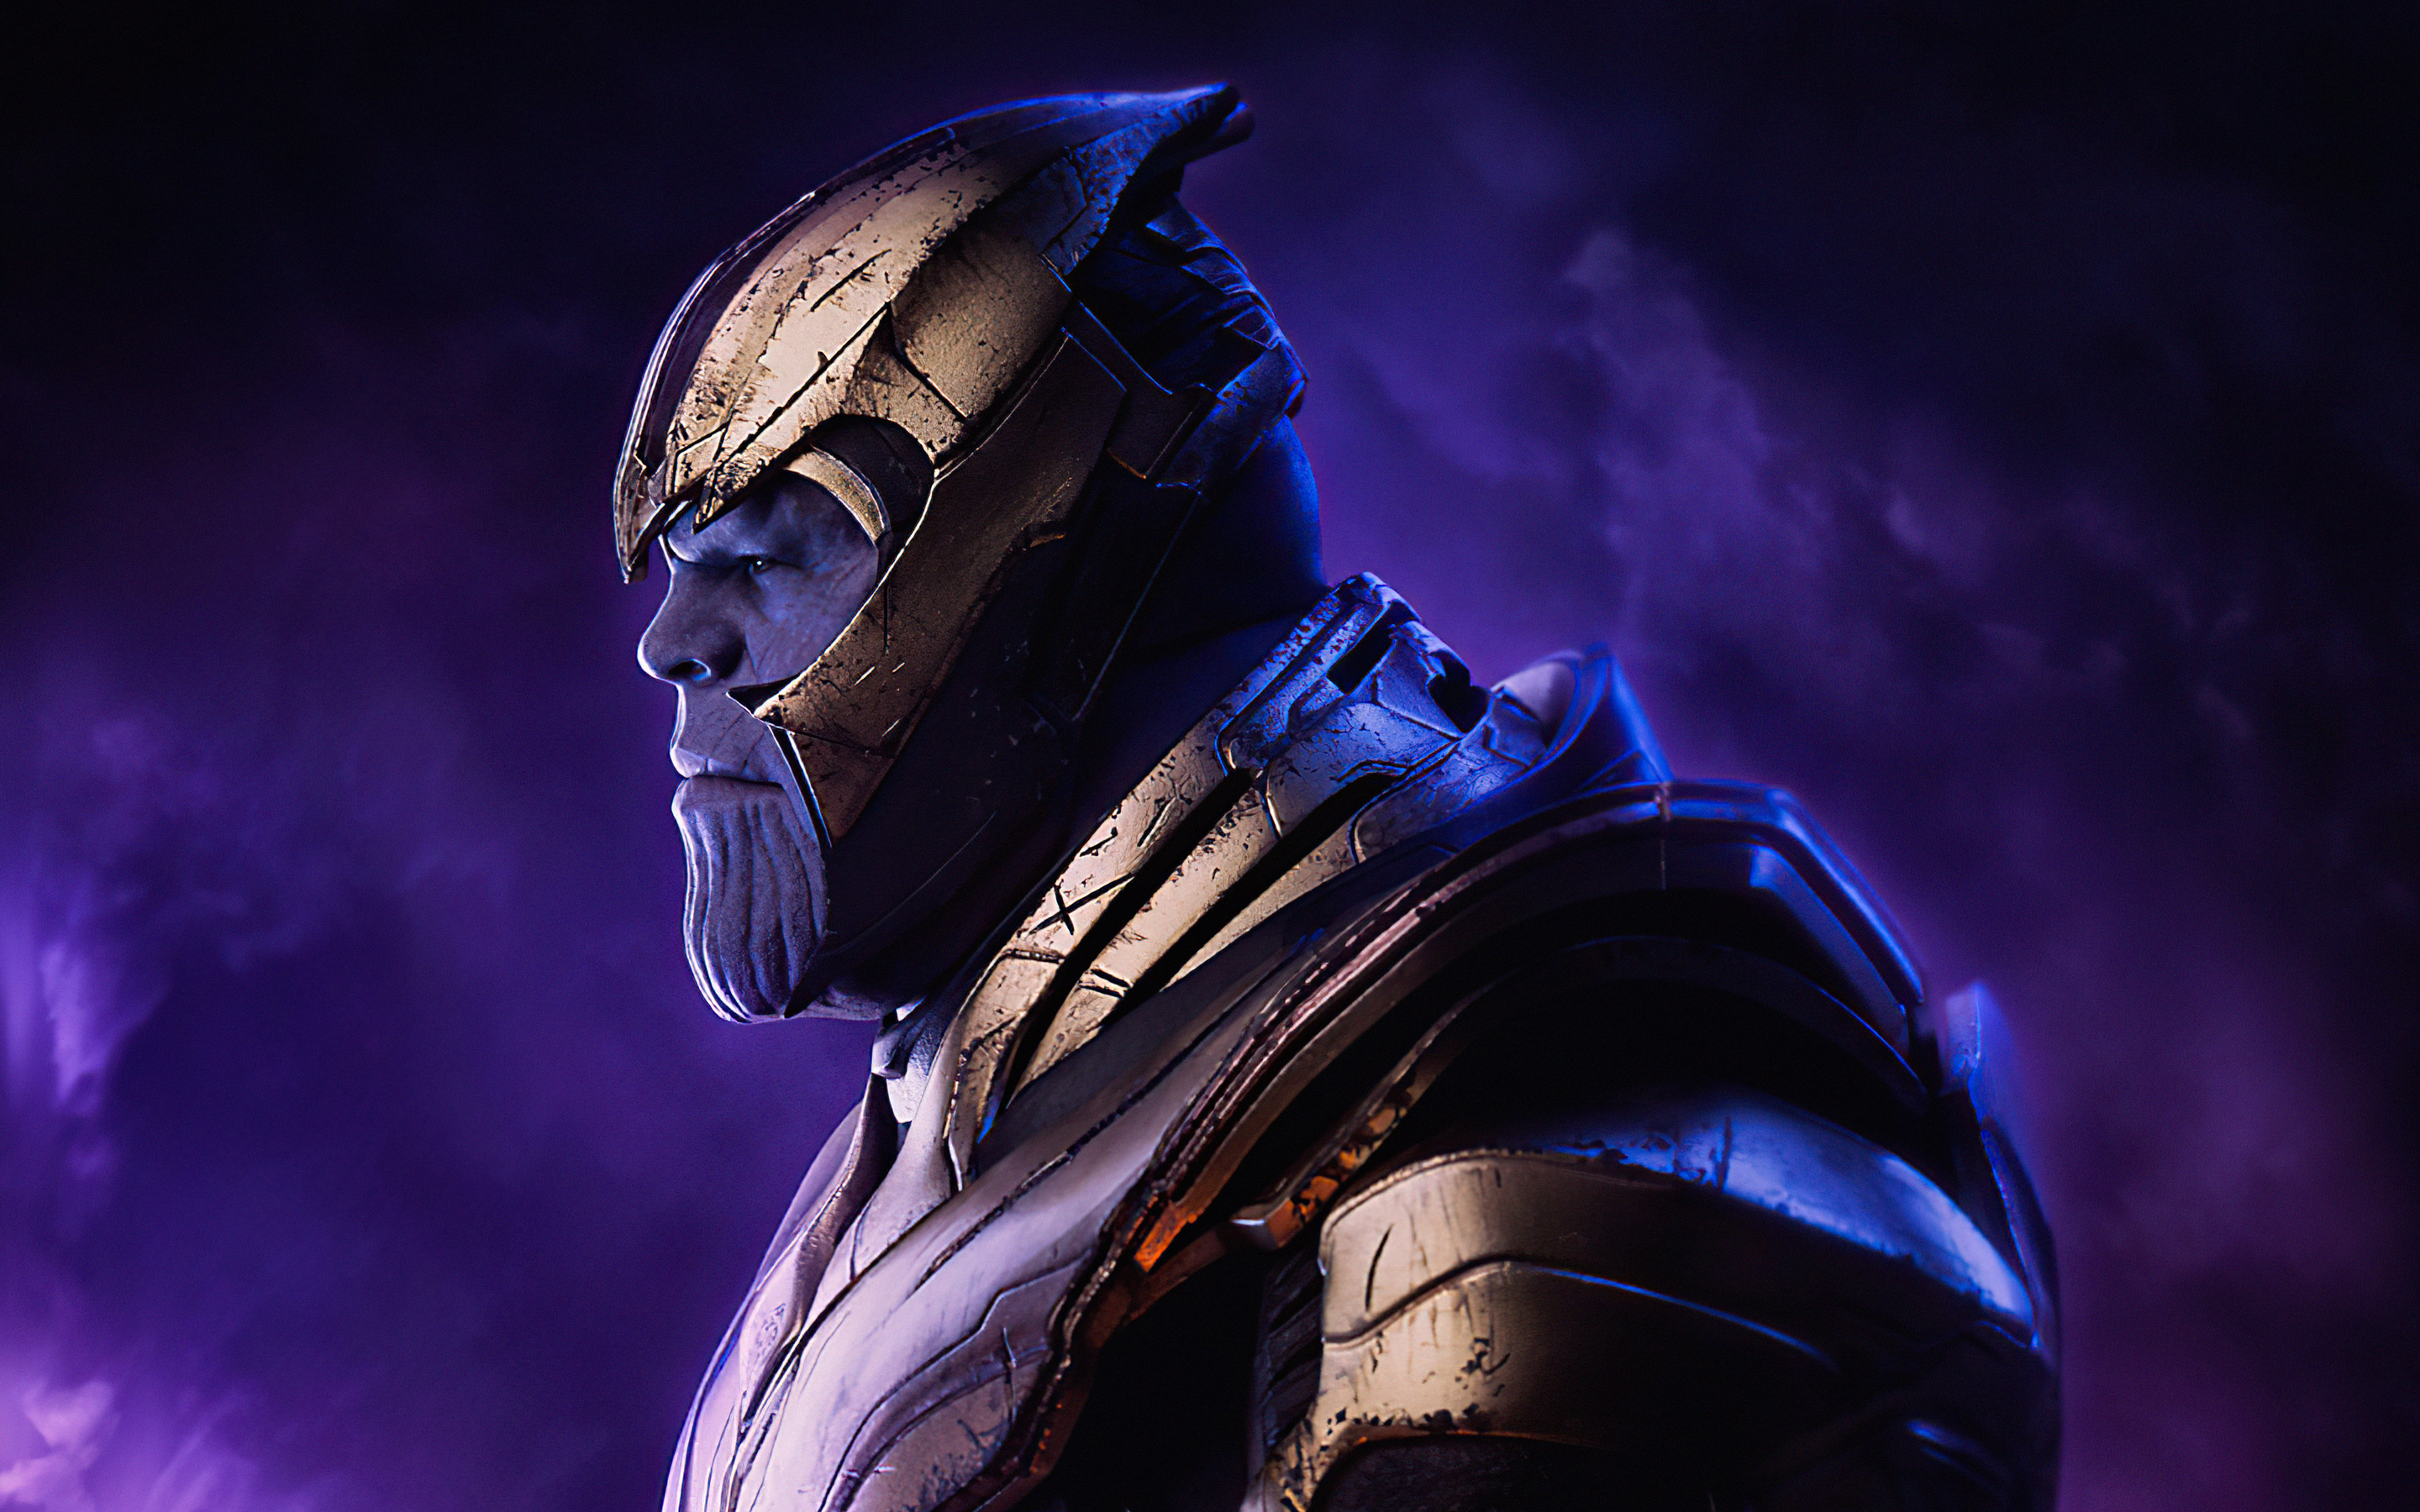 Thanos Side 5k In 2880x1800 Resolution. thanos-side-5k-q3.jpg. 